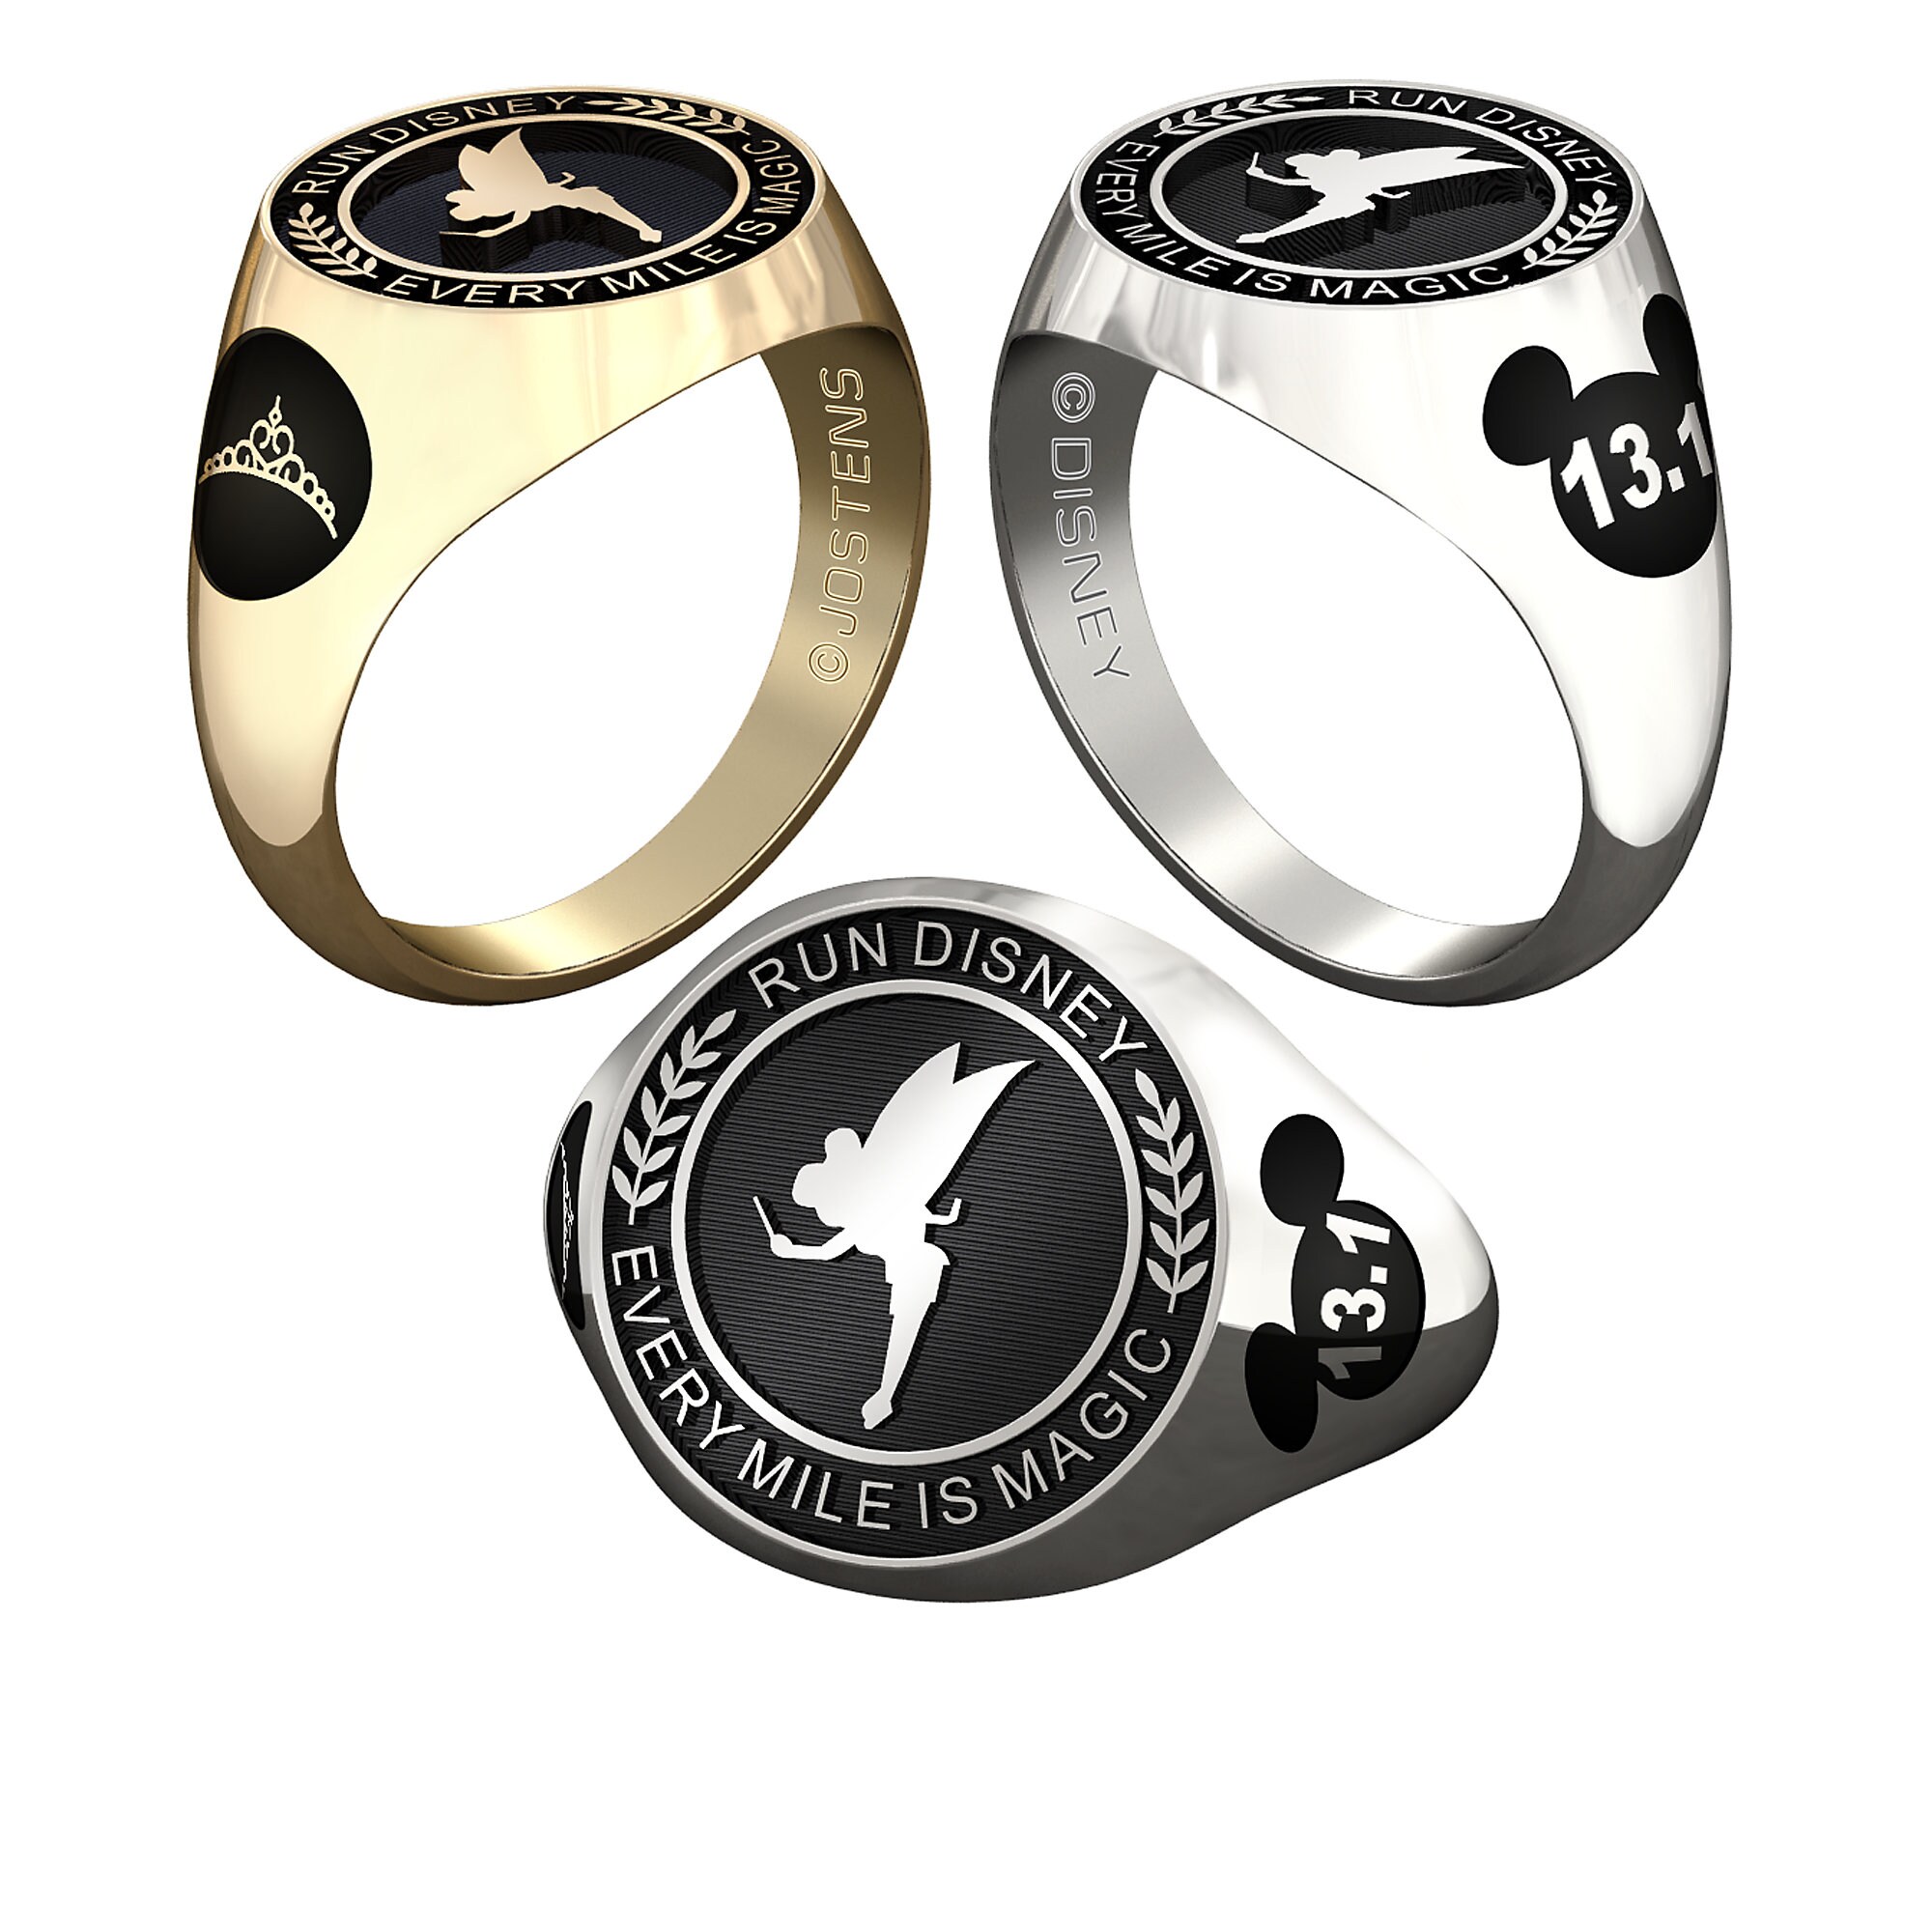 Tinker Bell runDisney Ring for Women by Jostens - Personalizable